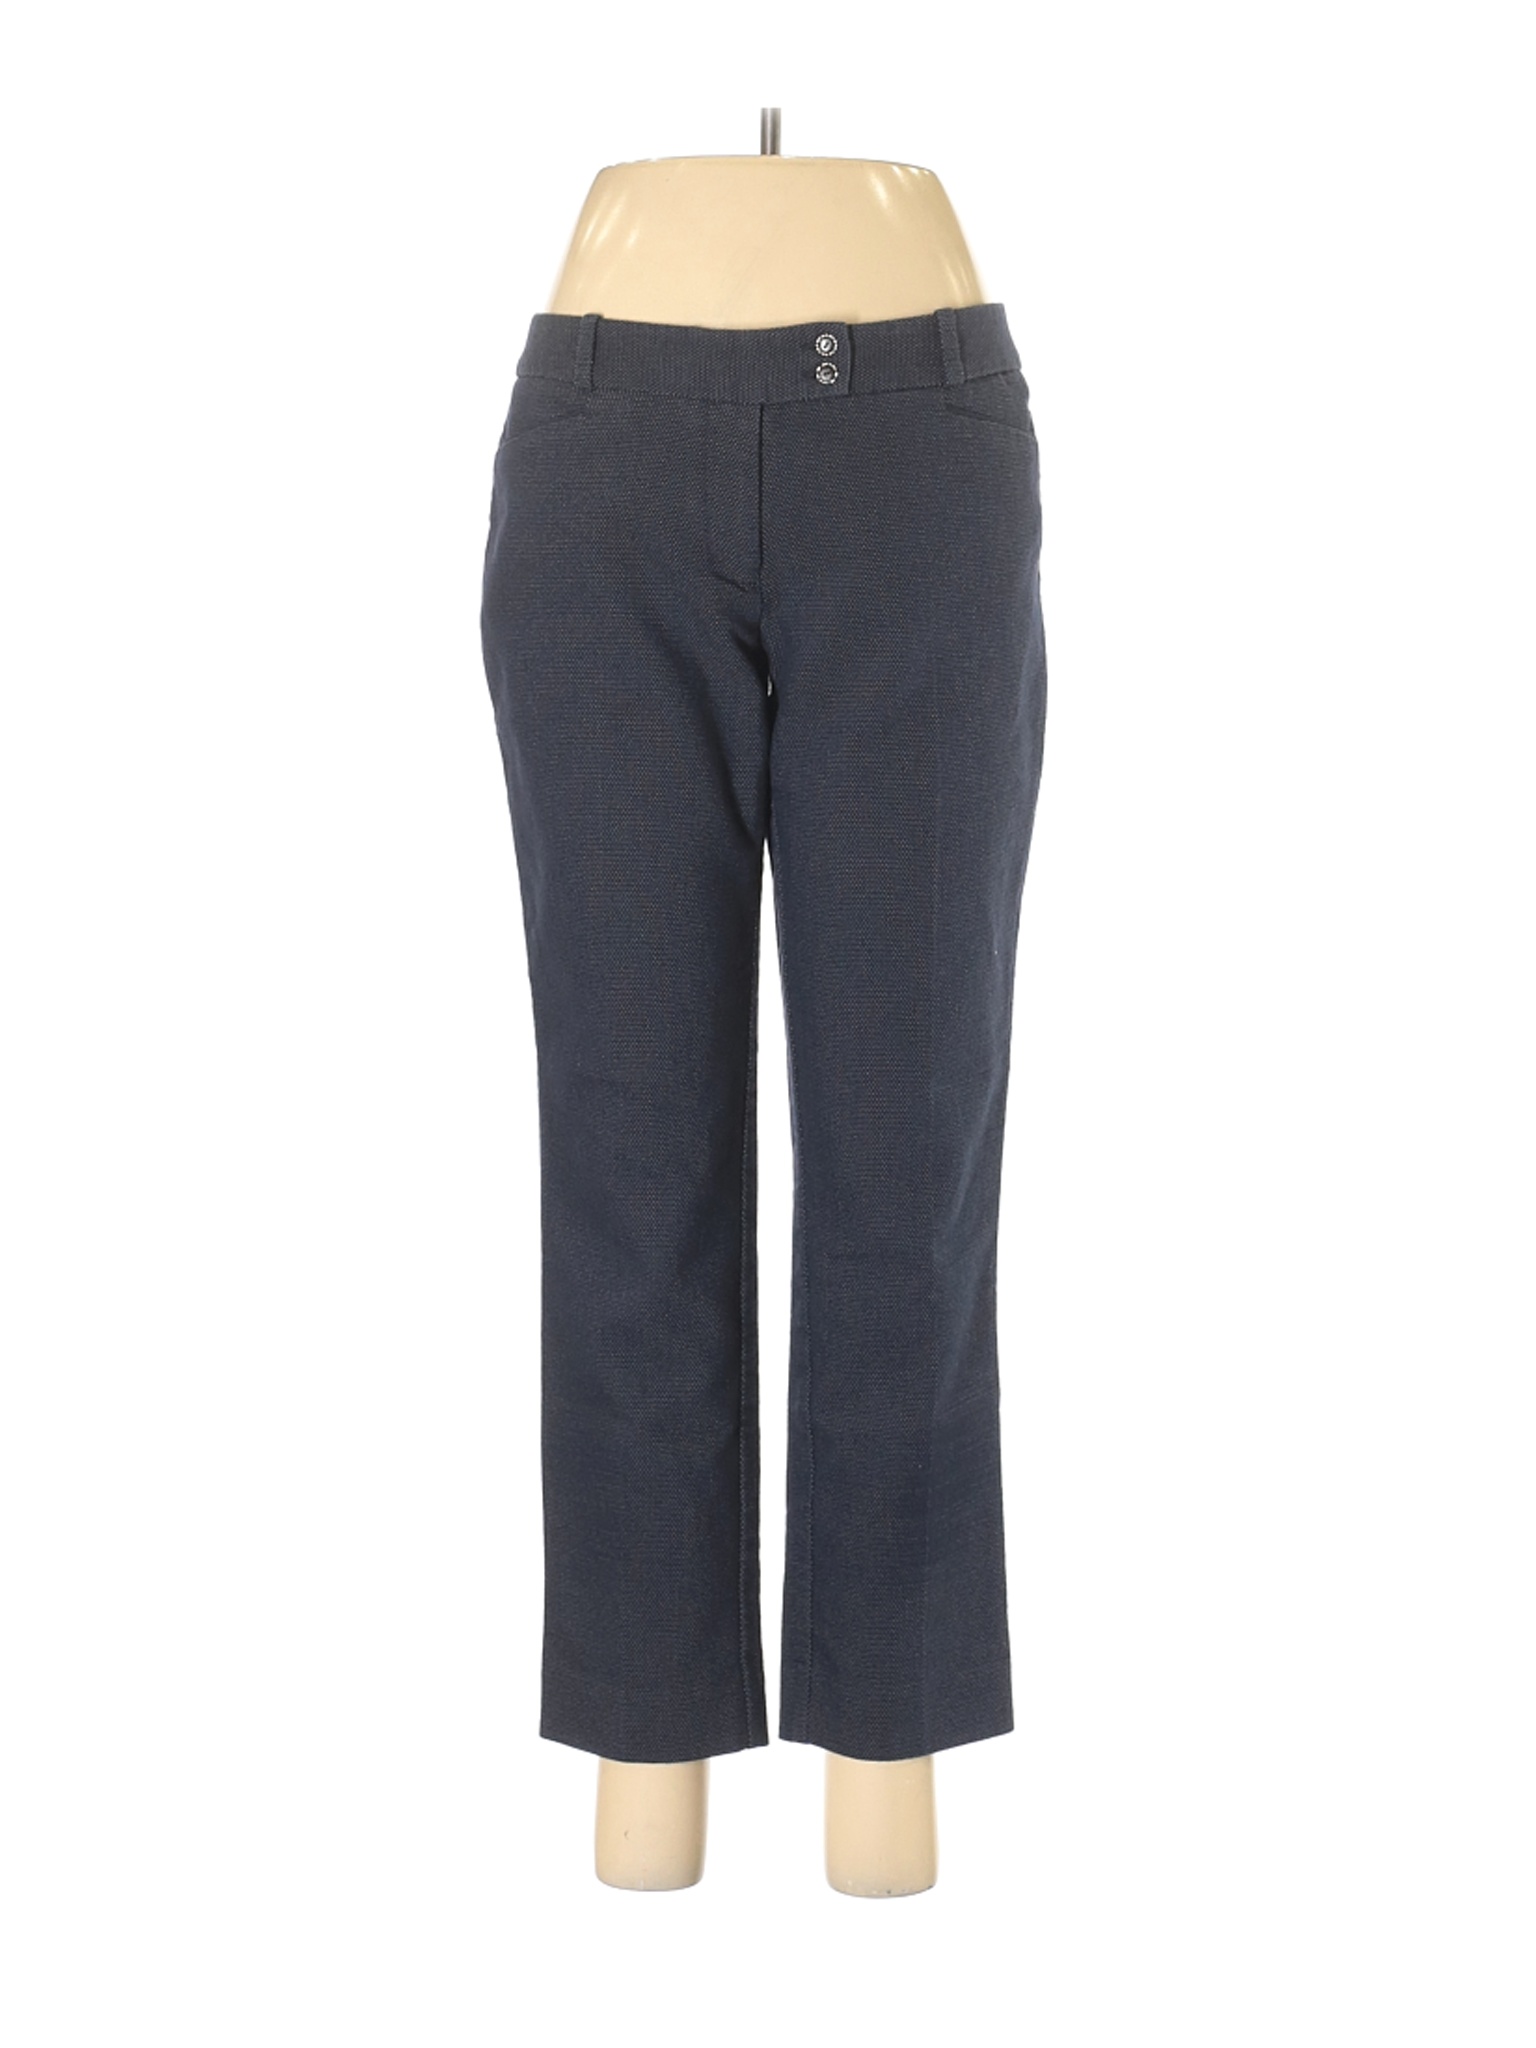 The Limited Women Blue Dress Pants 6 | eBay